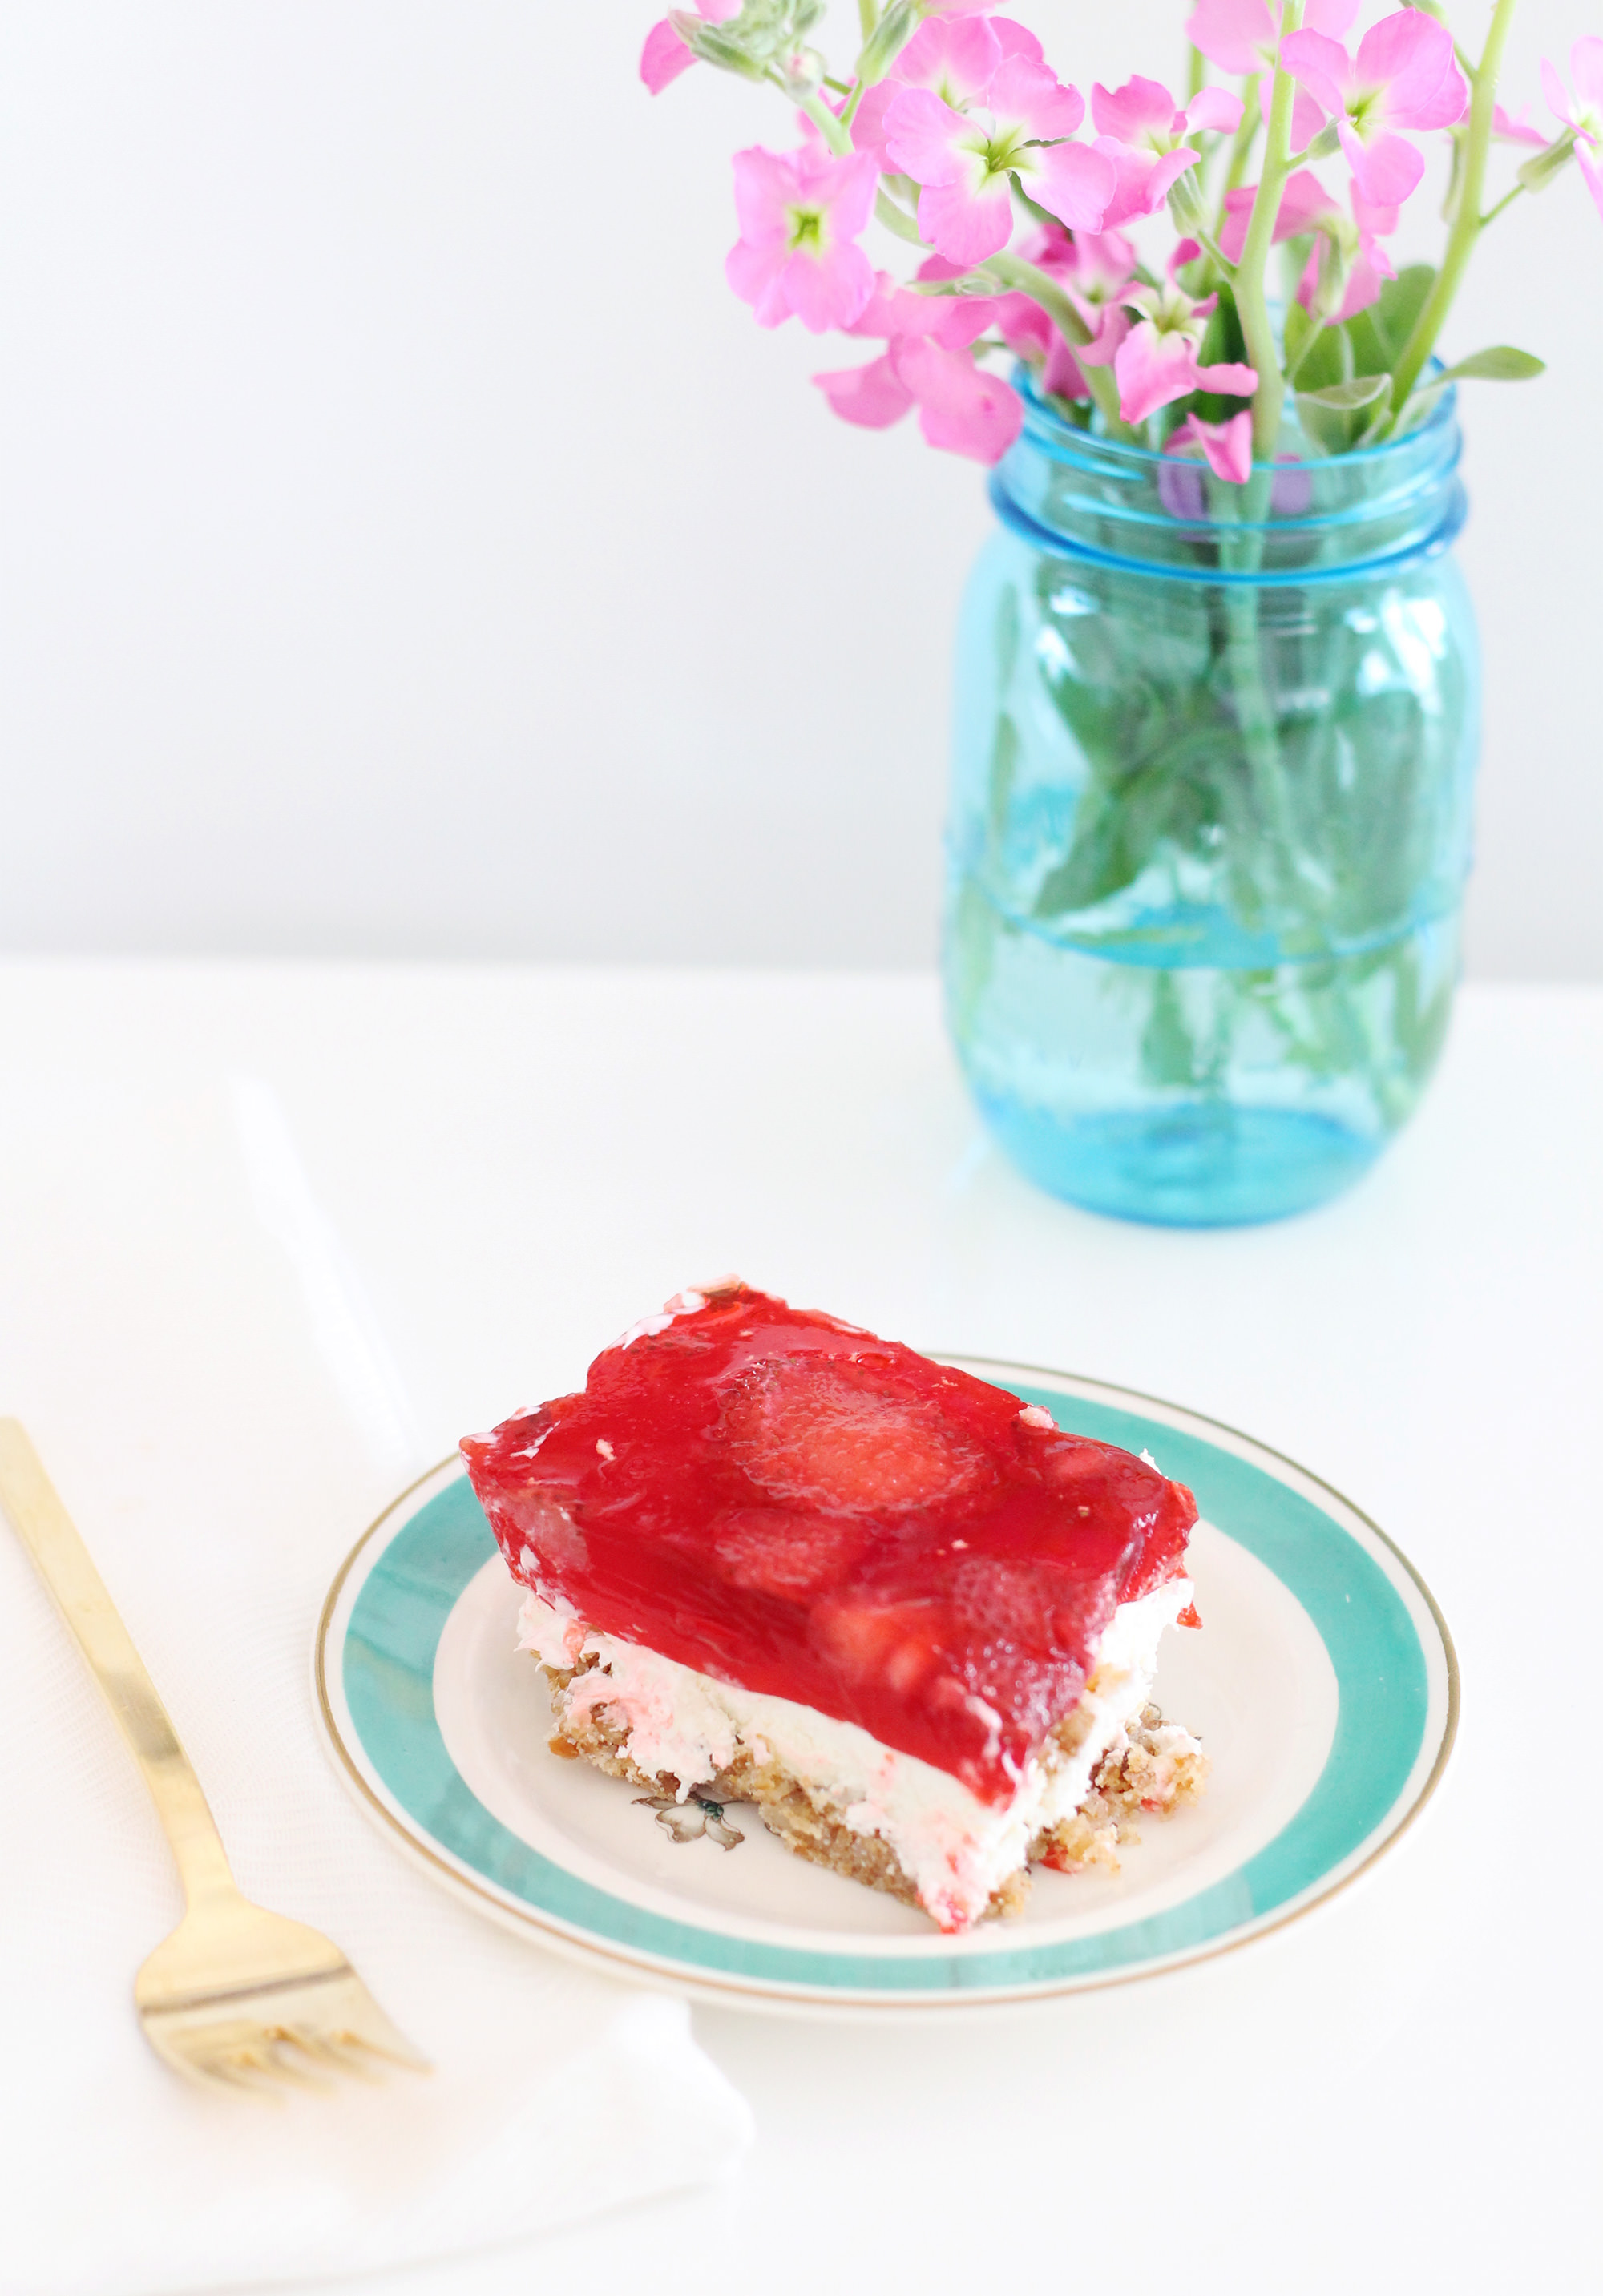 Strawberry Pretzel dessert is a crowd pleaser for summer picnics